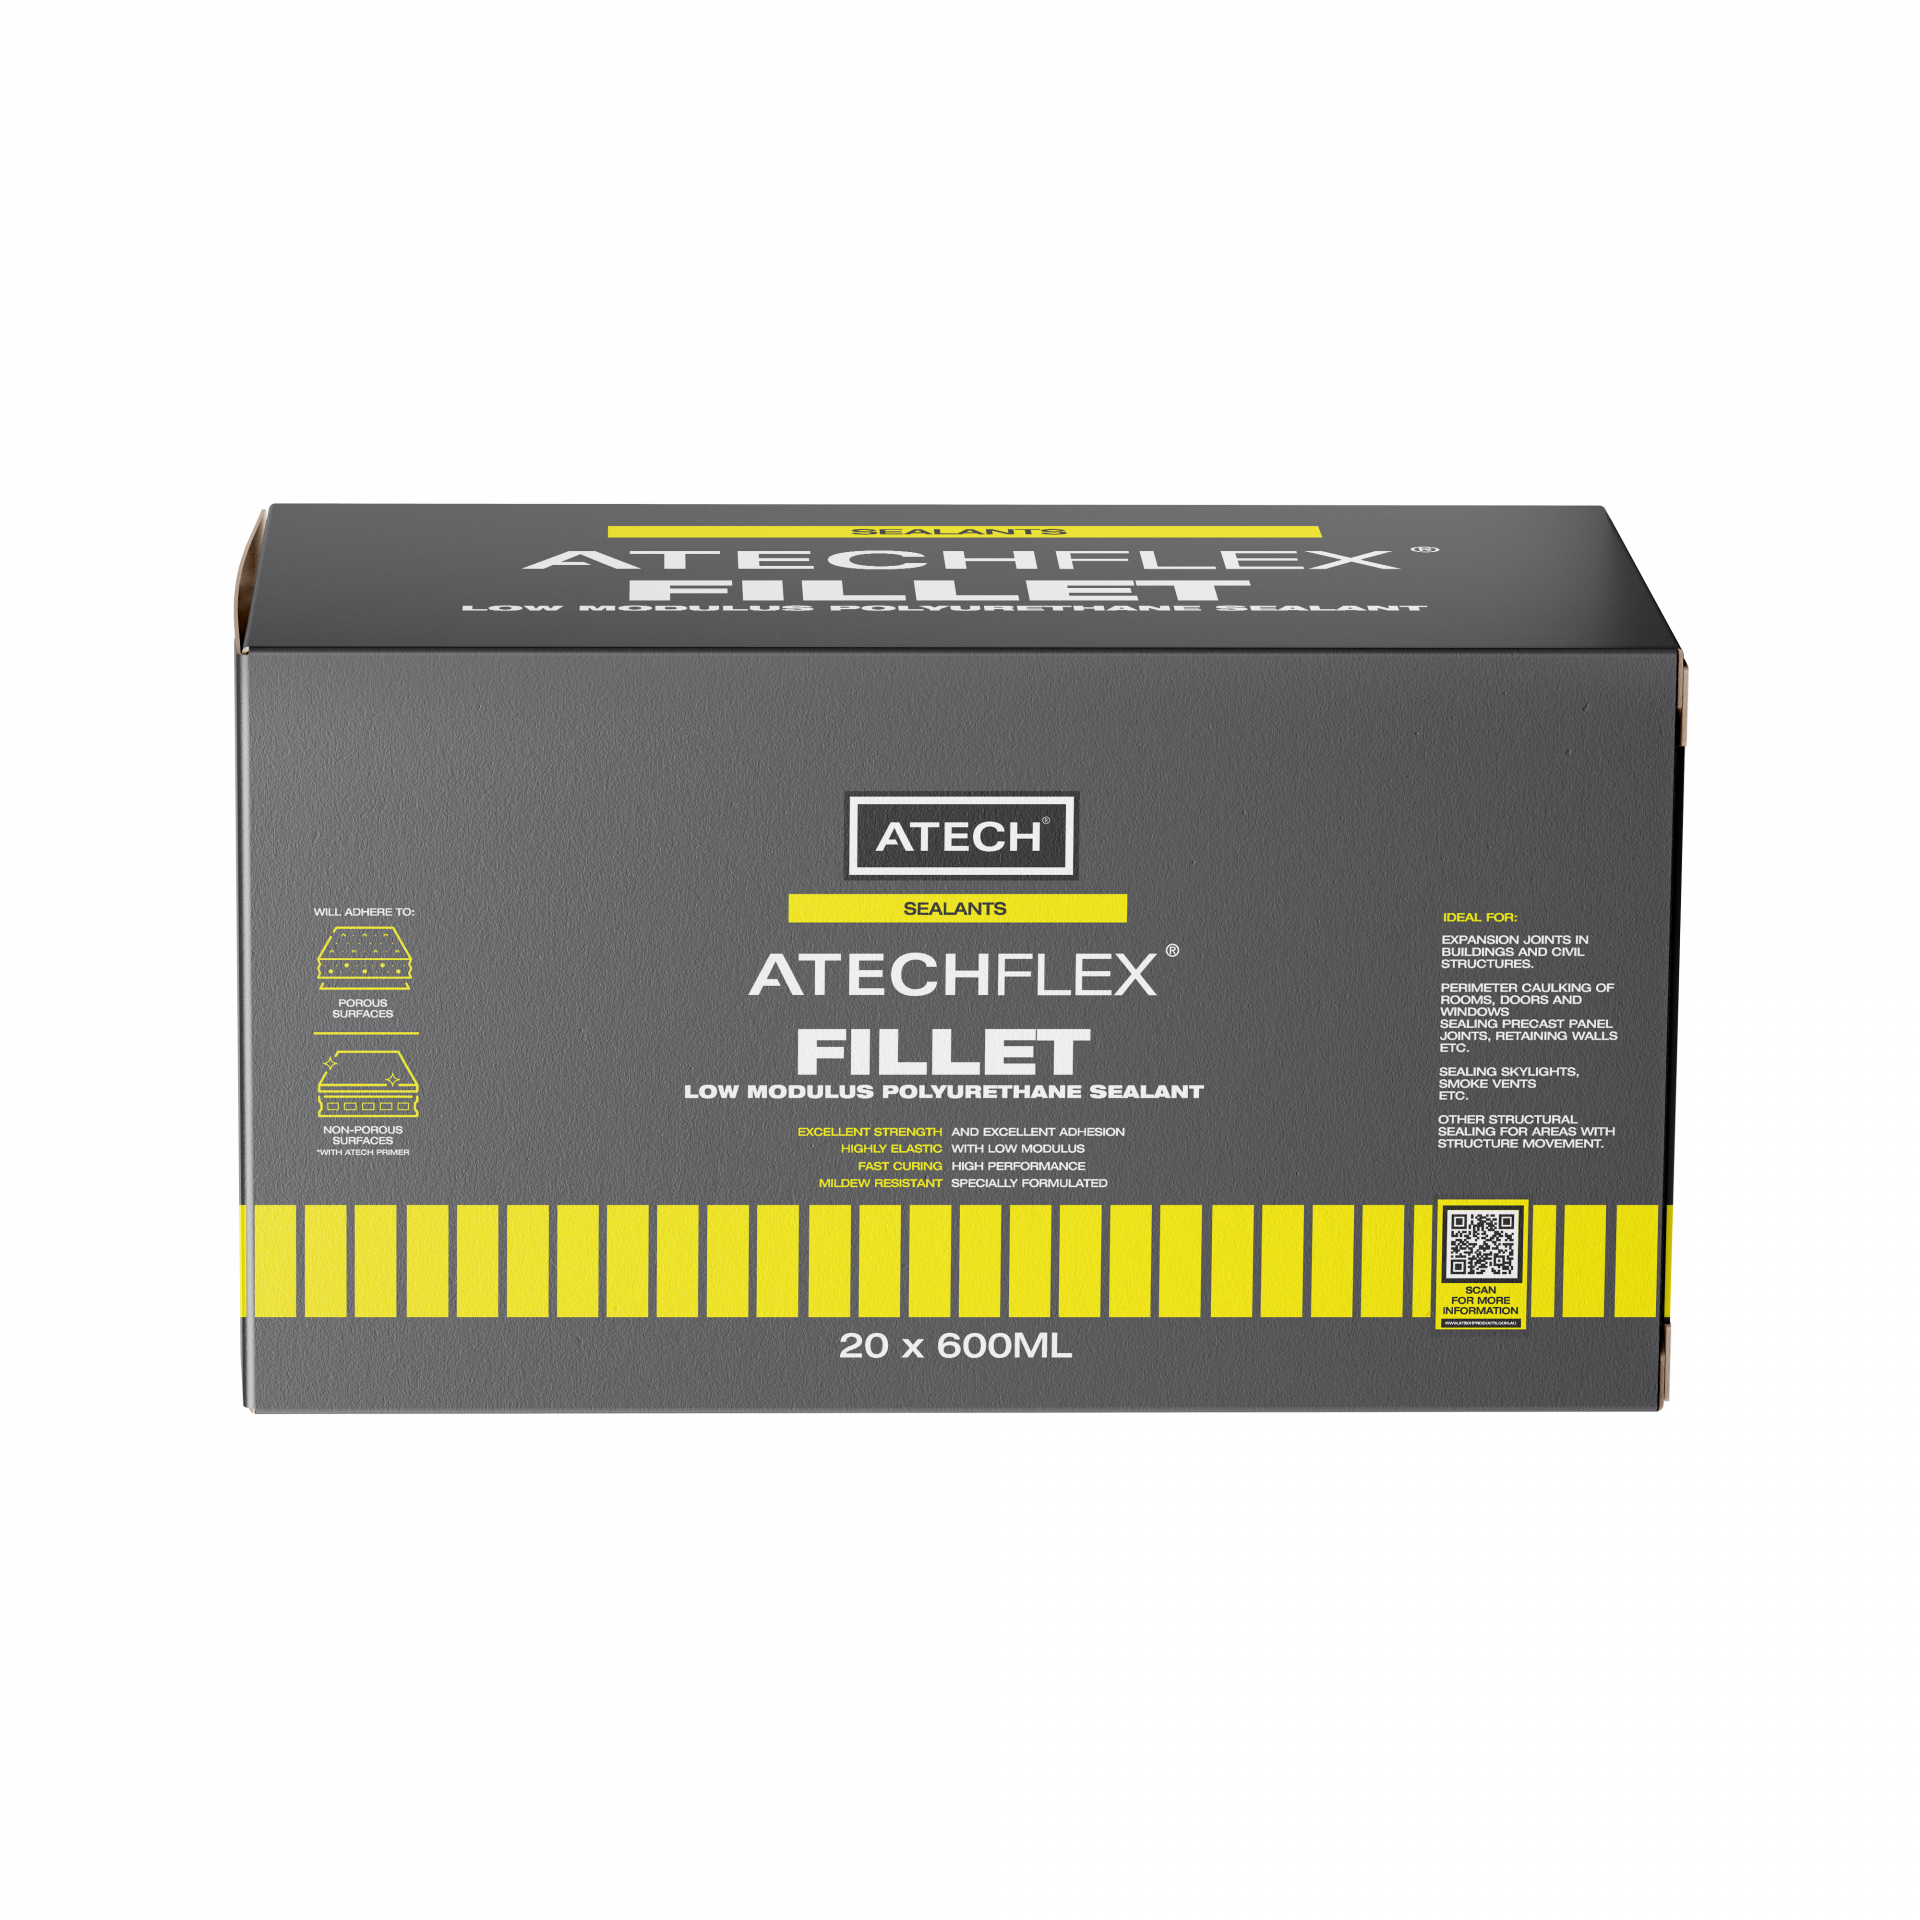 Atechflex Fillet Box